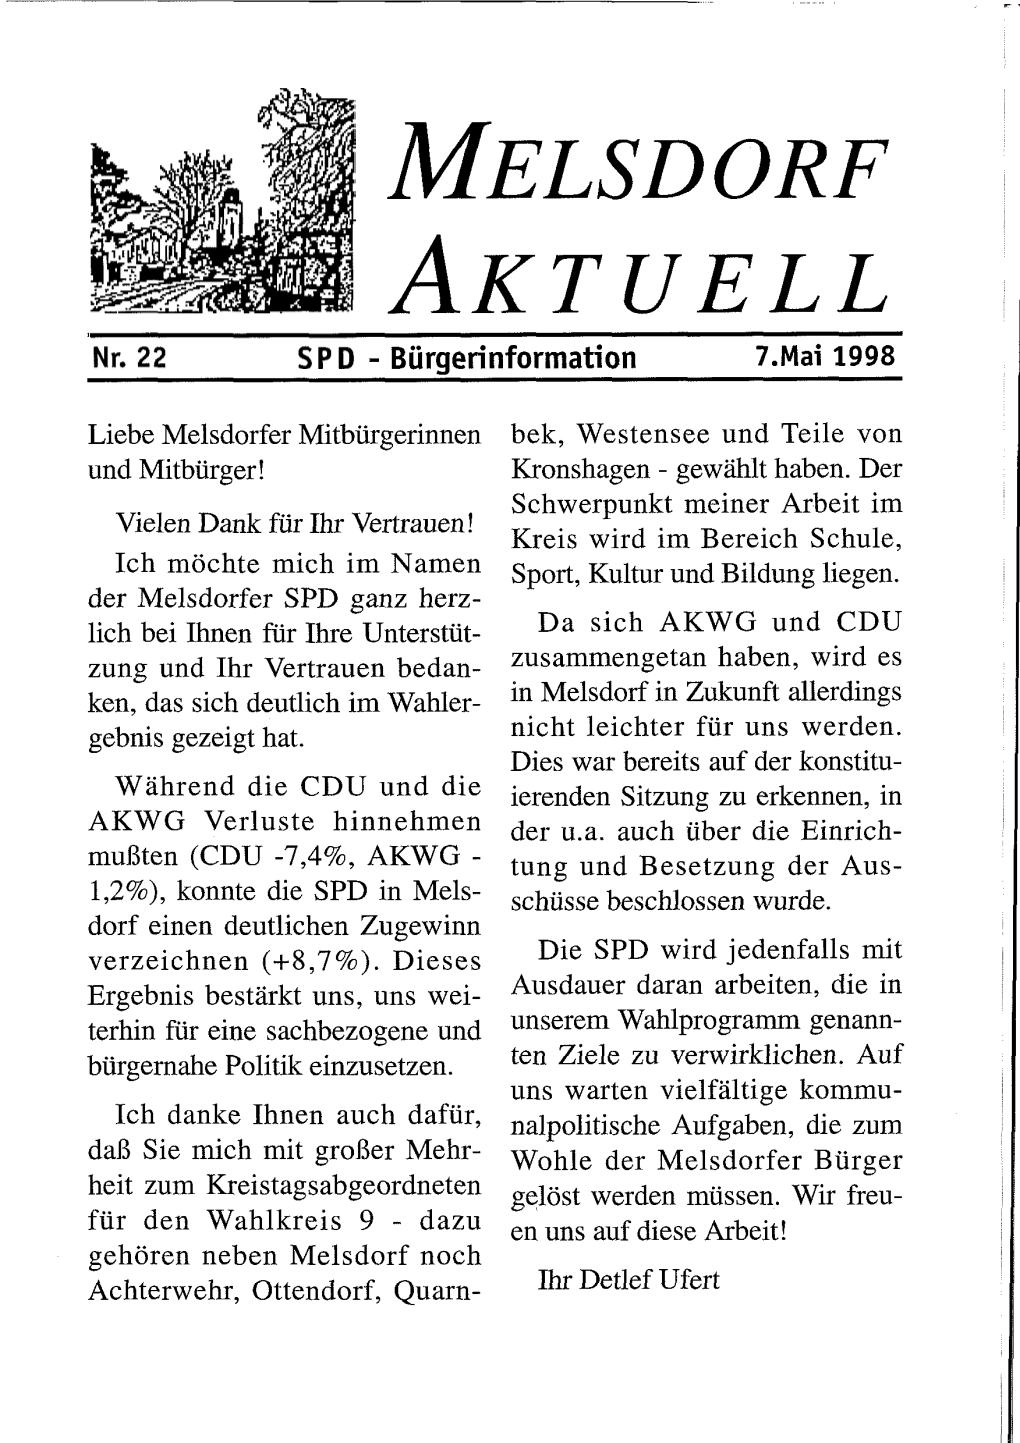 Melsdorf Aktuell - Bürgerinformation______7.Mai 1998